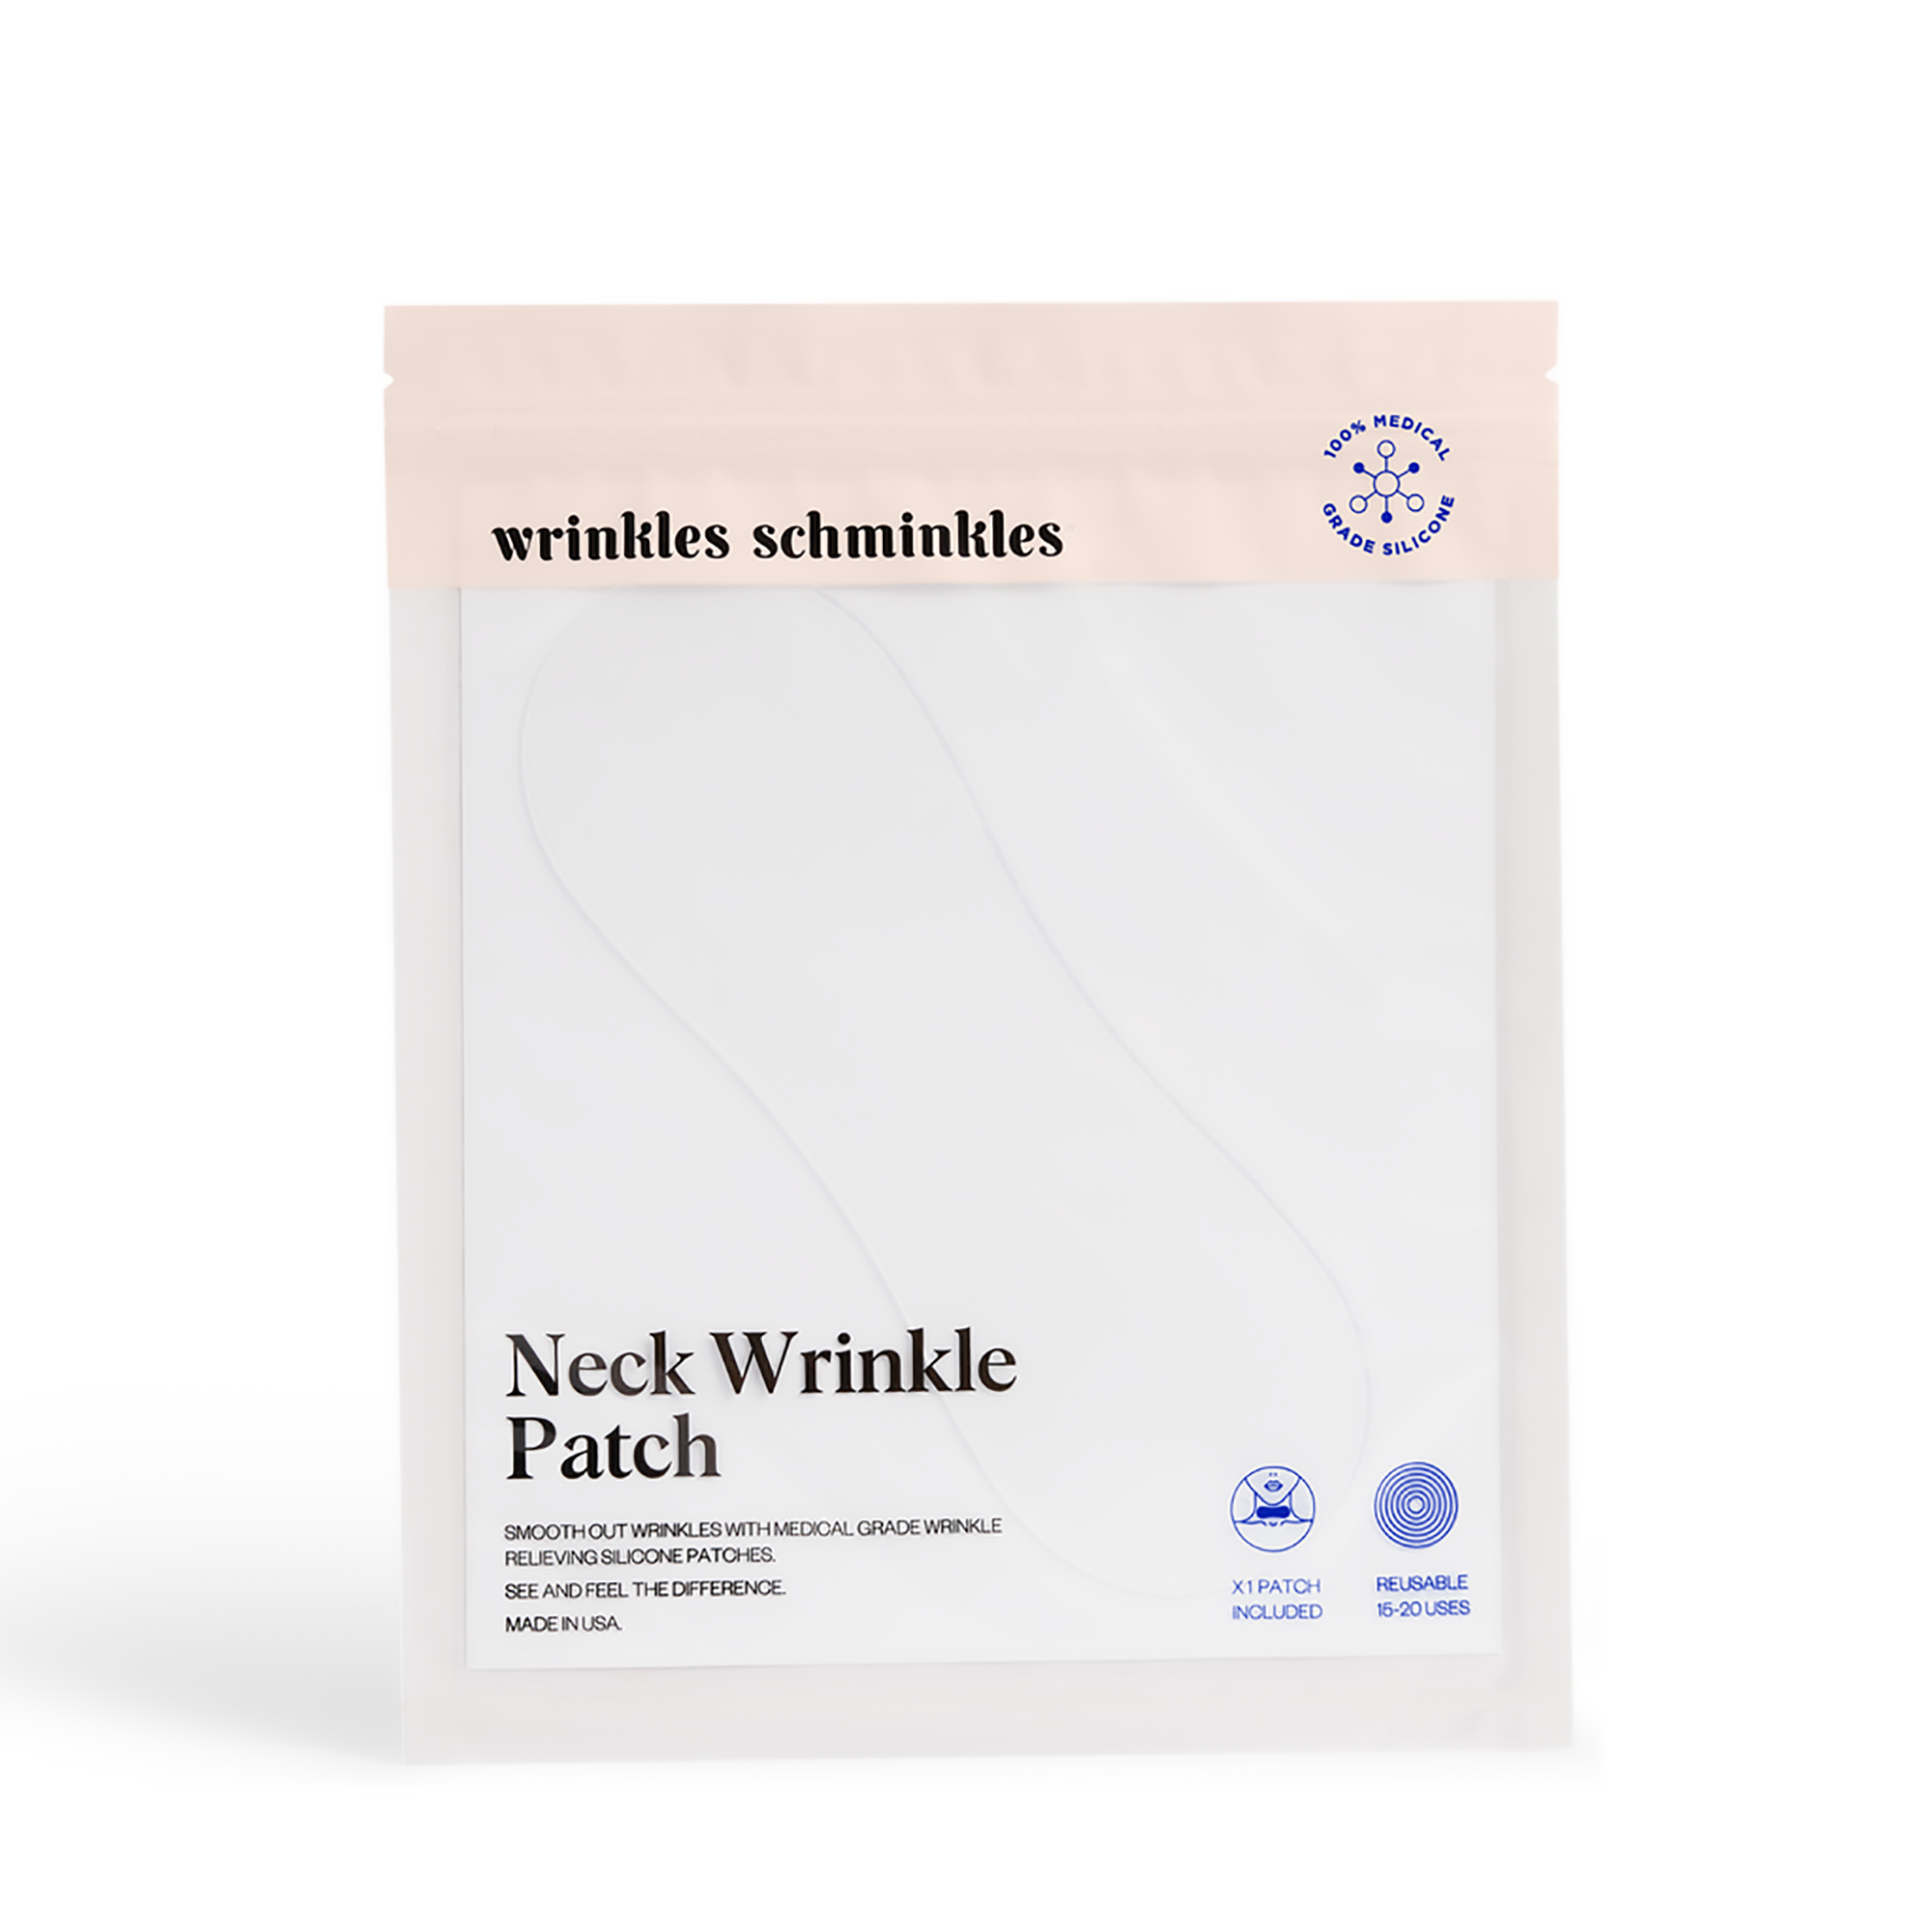 Wrinkles Schminkles Neck Wrinkle Patch